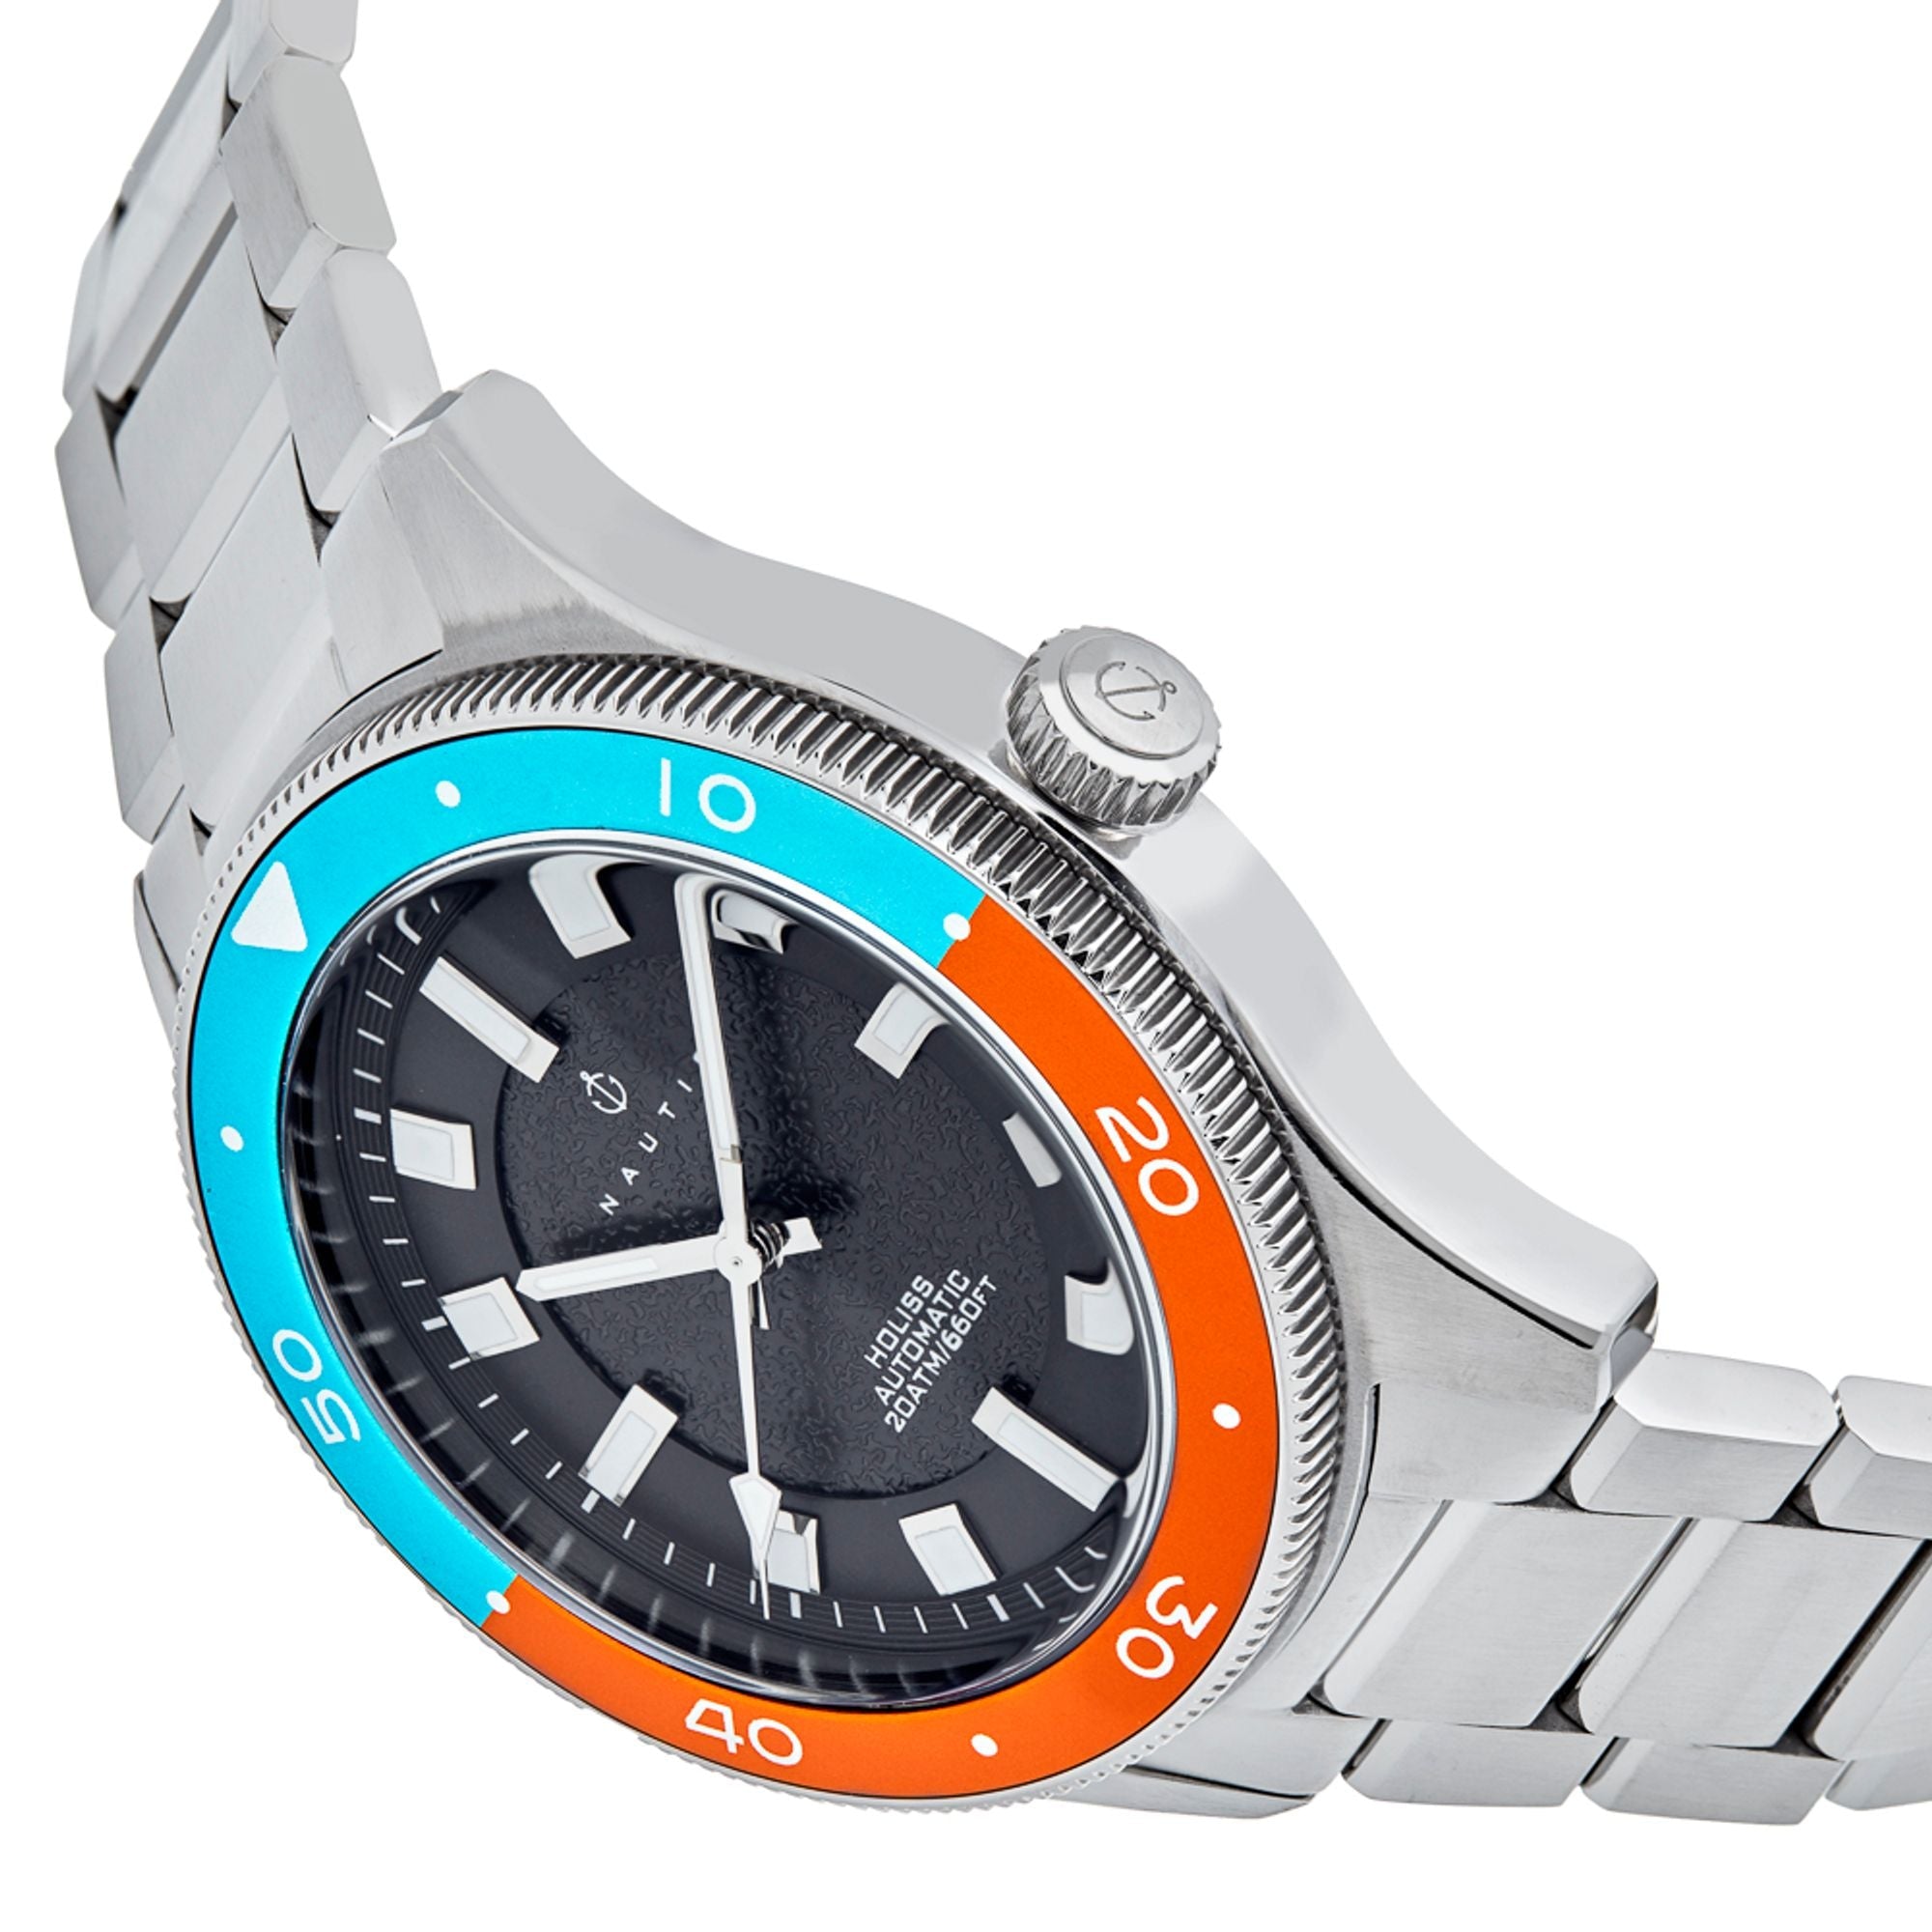 Nautis Holiss Automatic Watch - Blue/Orange NAUN103-4